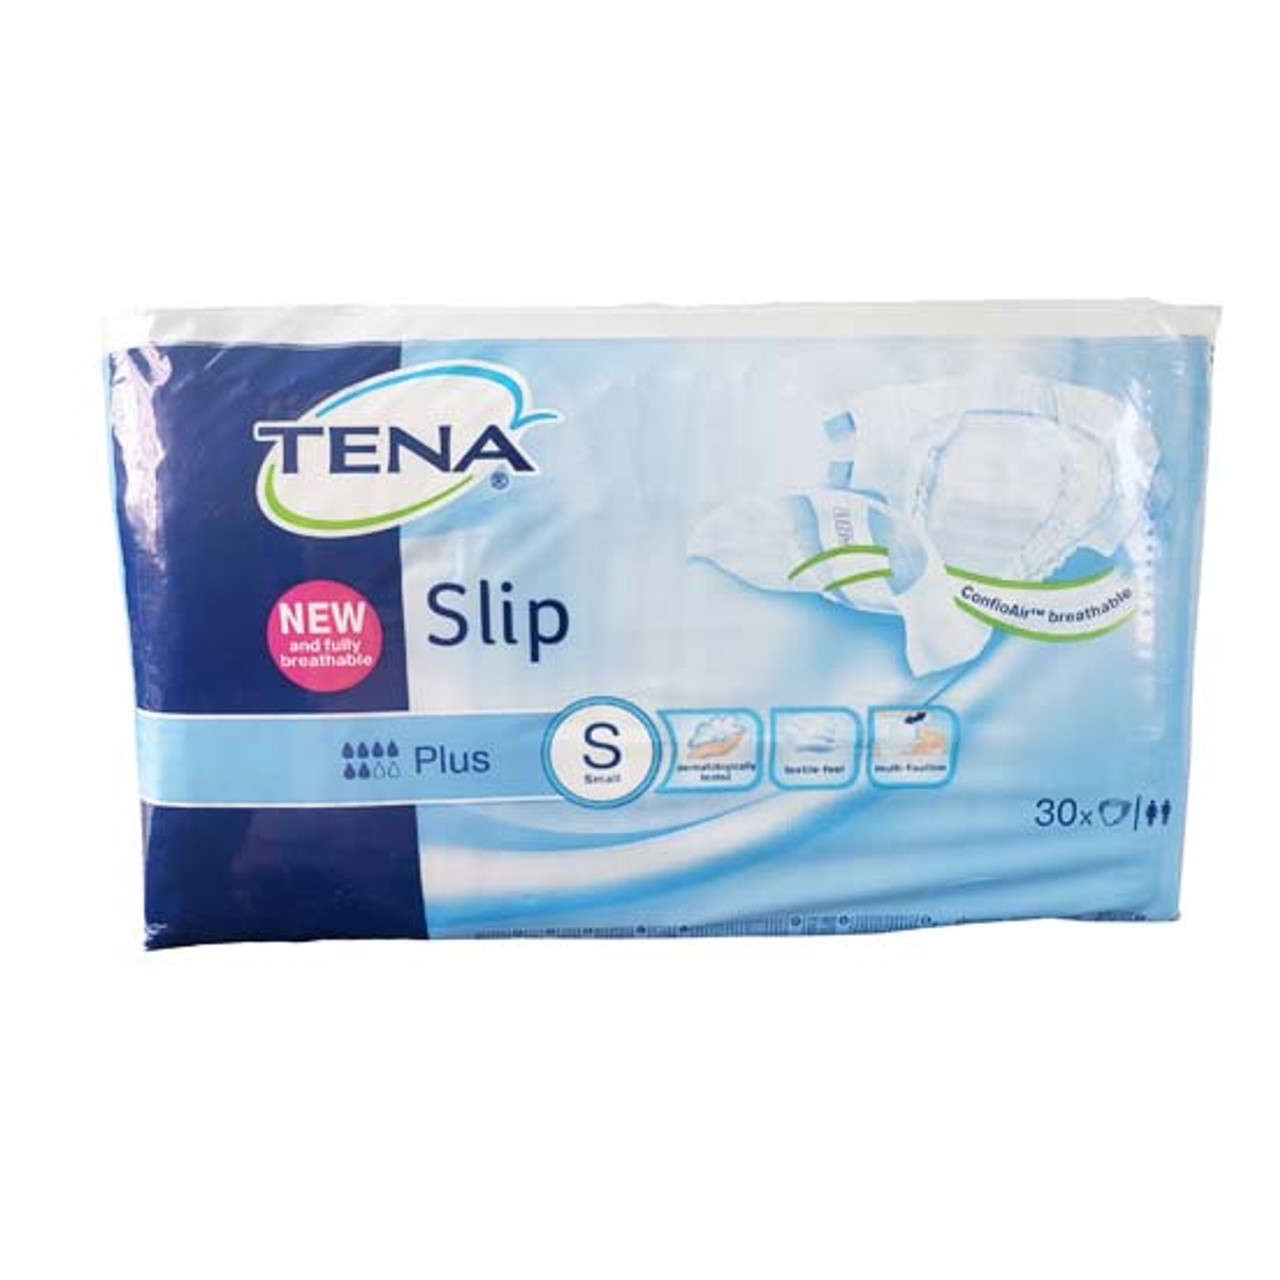 TENA Slip Plus - S Small - Pack of 30
